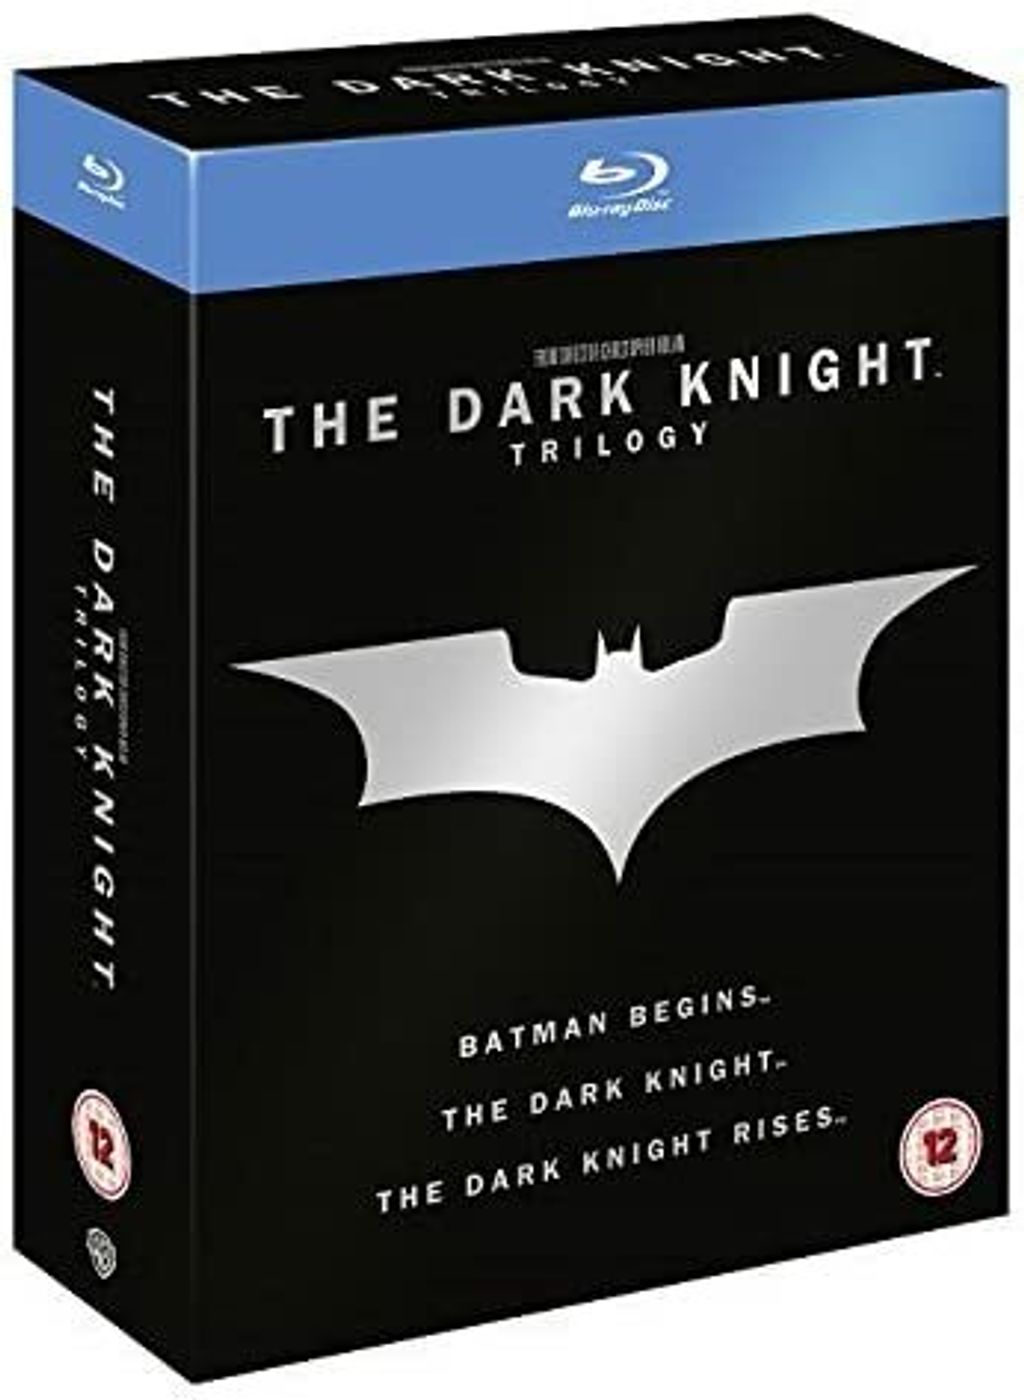 THE DARK KNIGHT TRILOGY [Blu-ray] 5-discs.jpg